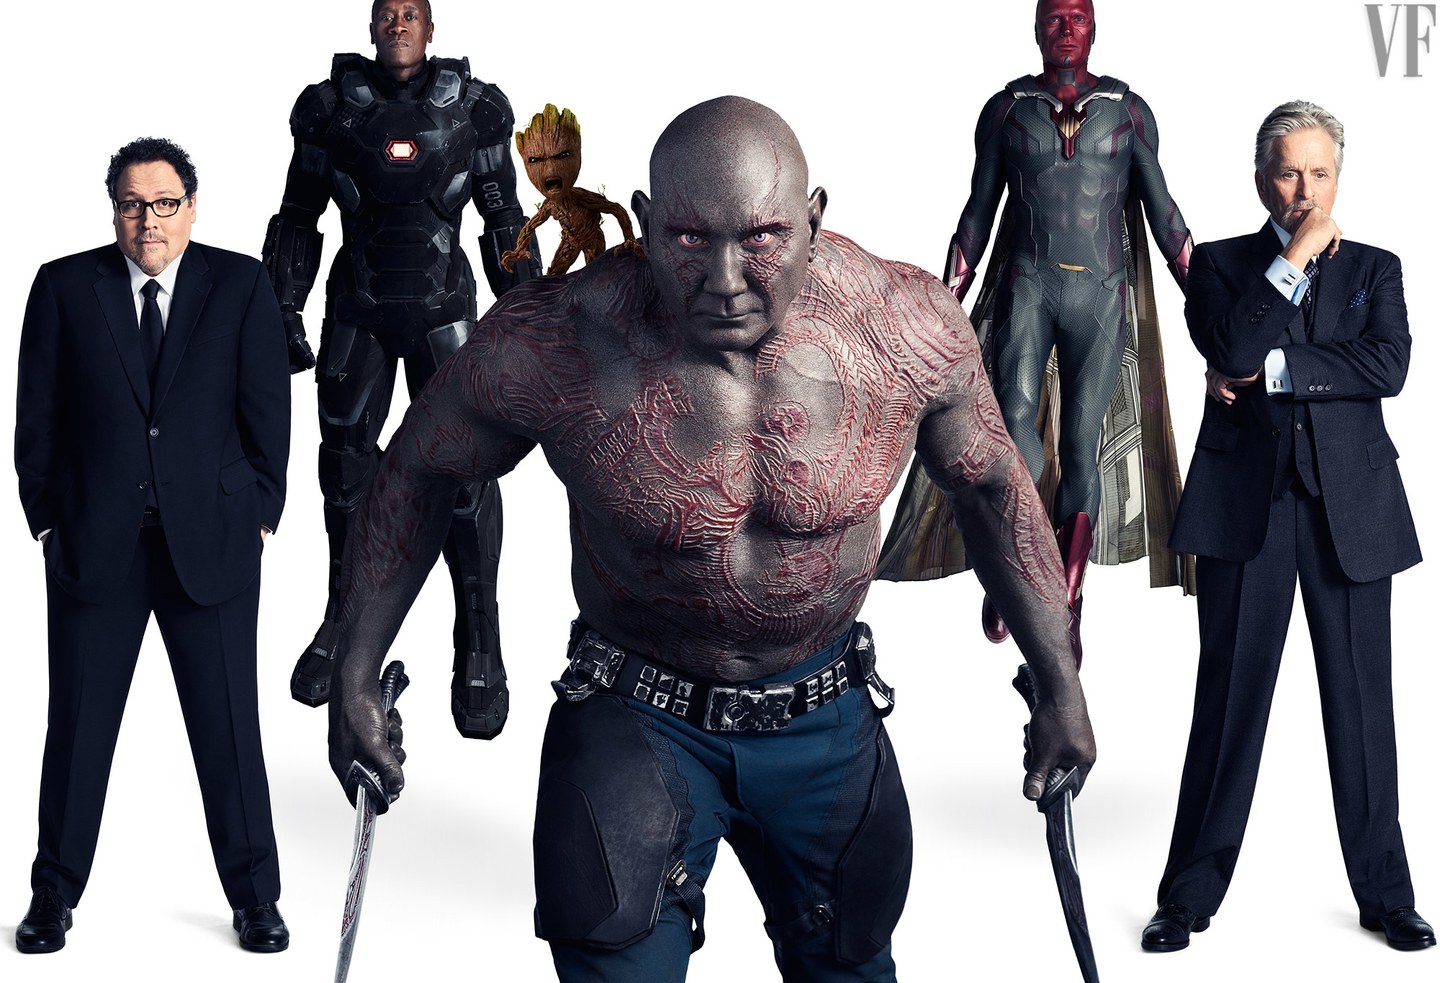 Akhirnya! Trailer Pertama 'Avengers: Infinity War' Dirilis